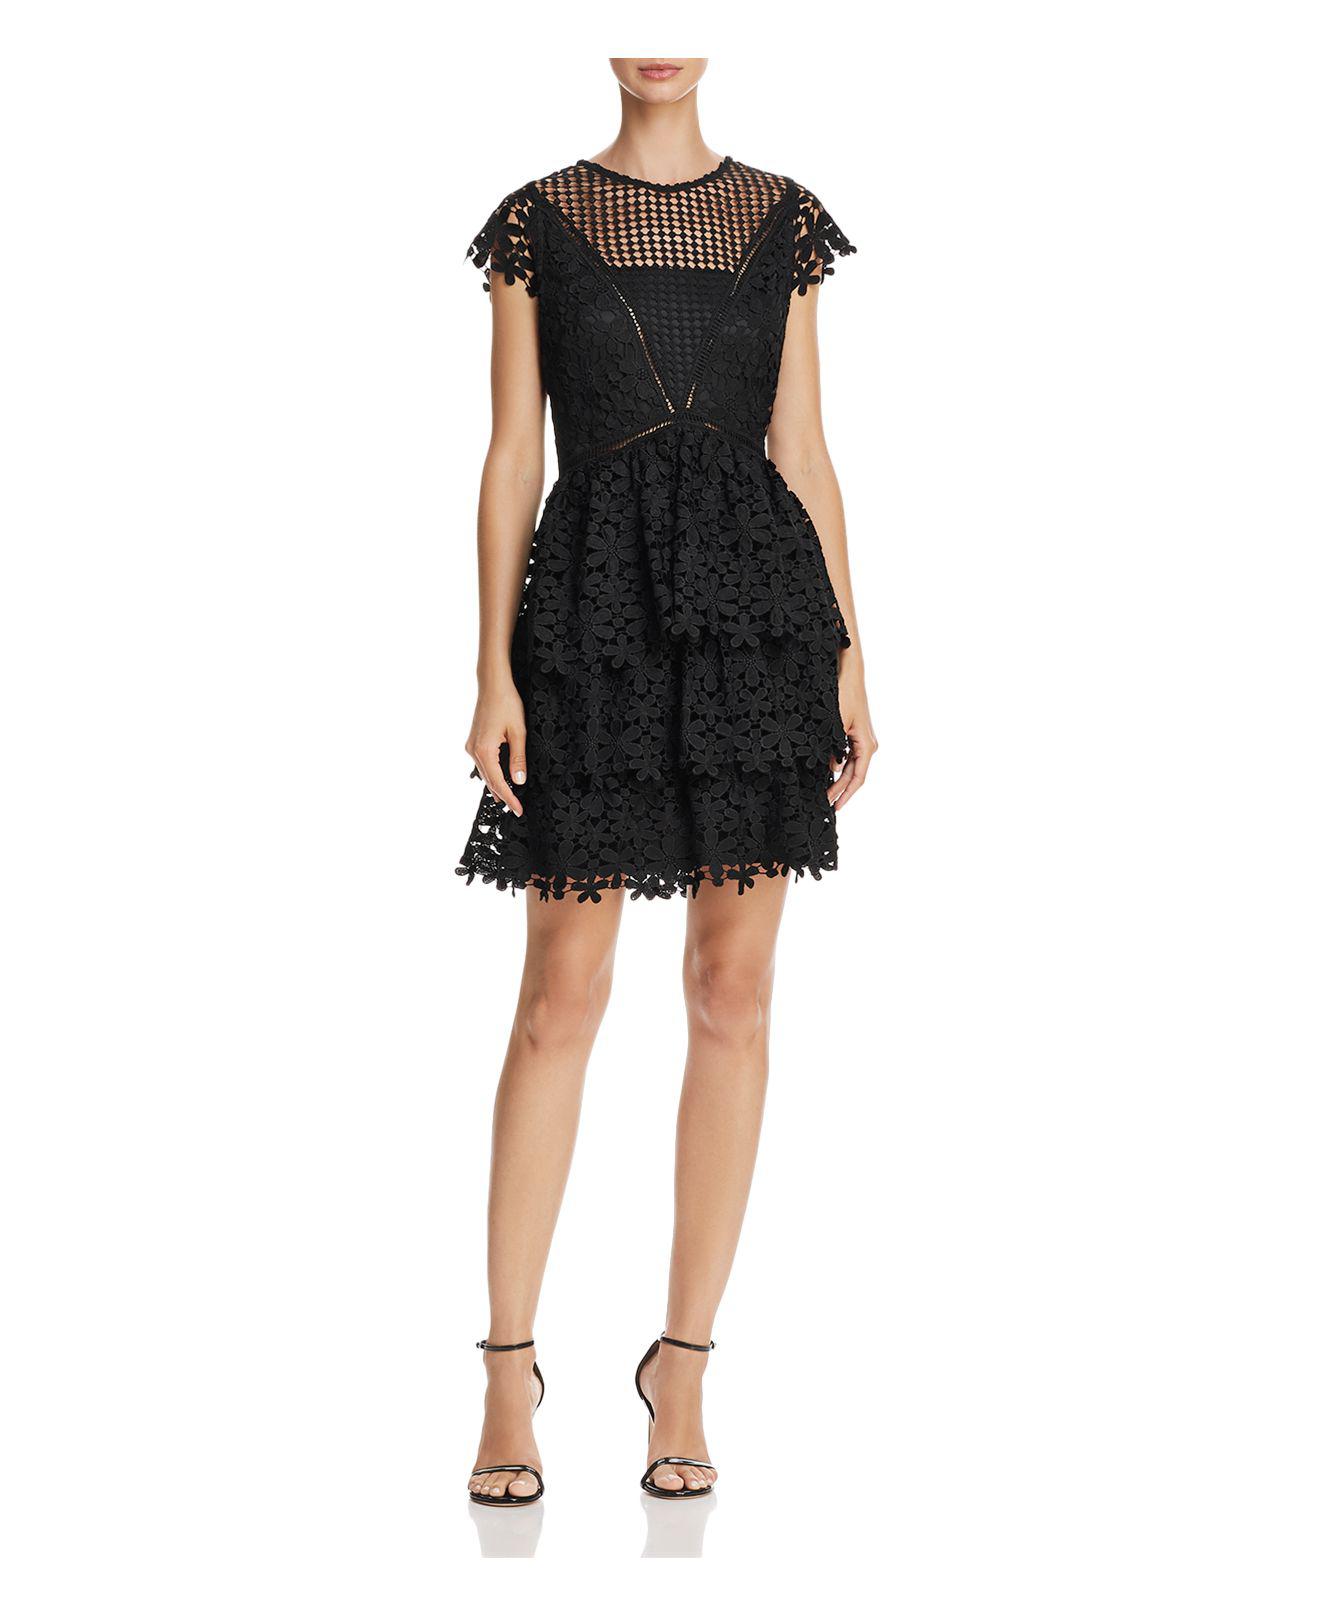 aqua black lace dress